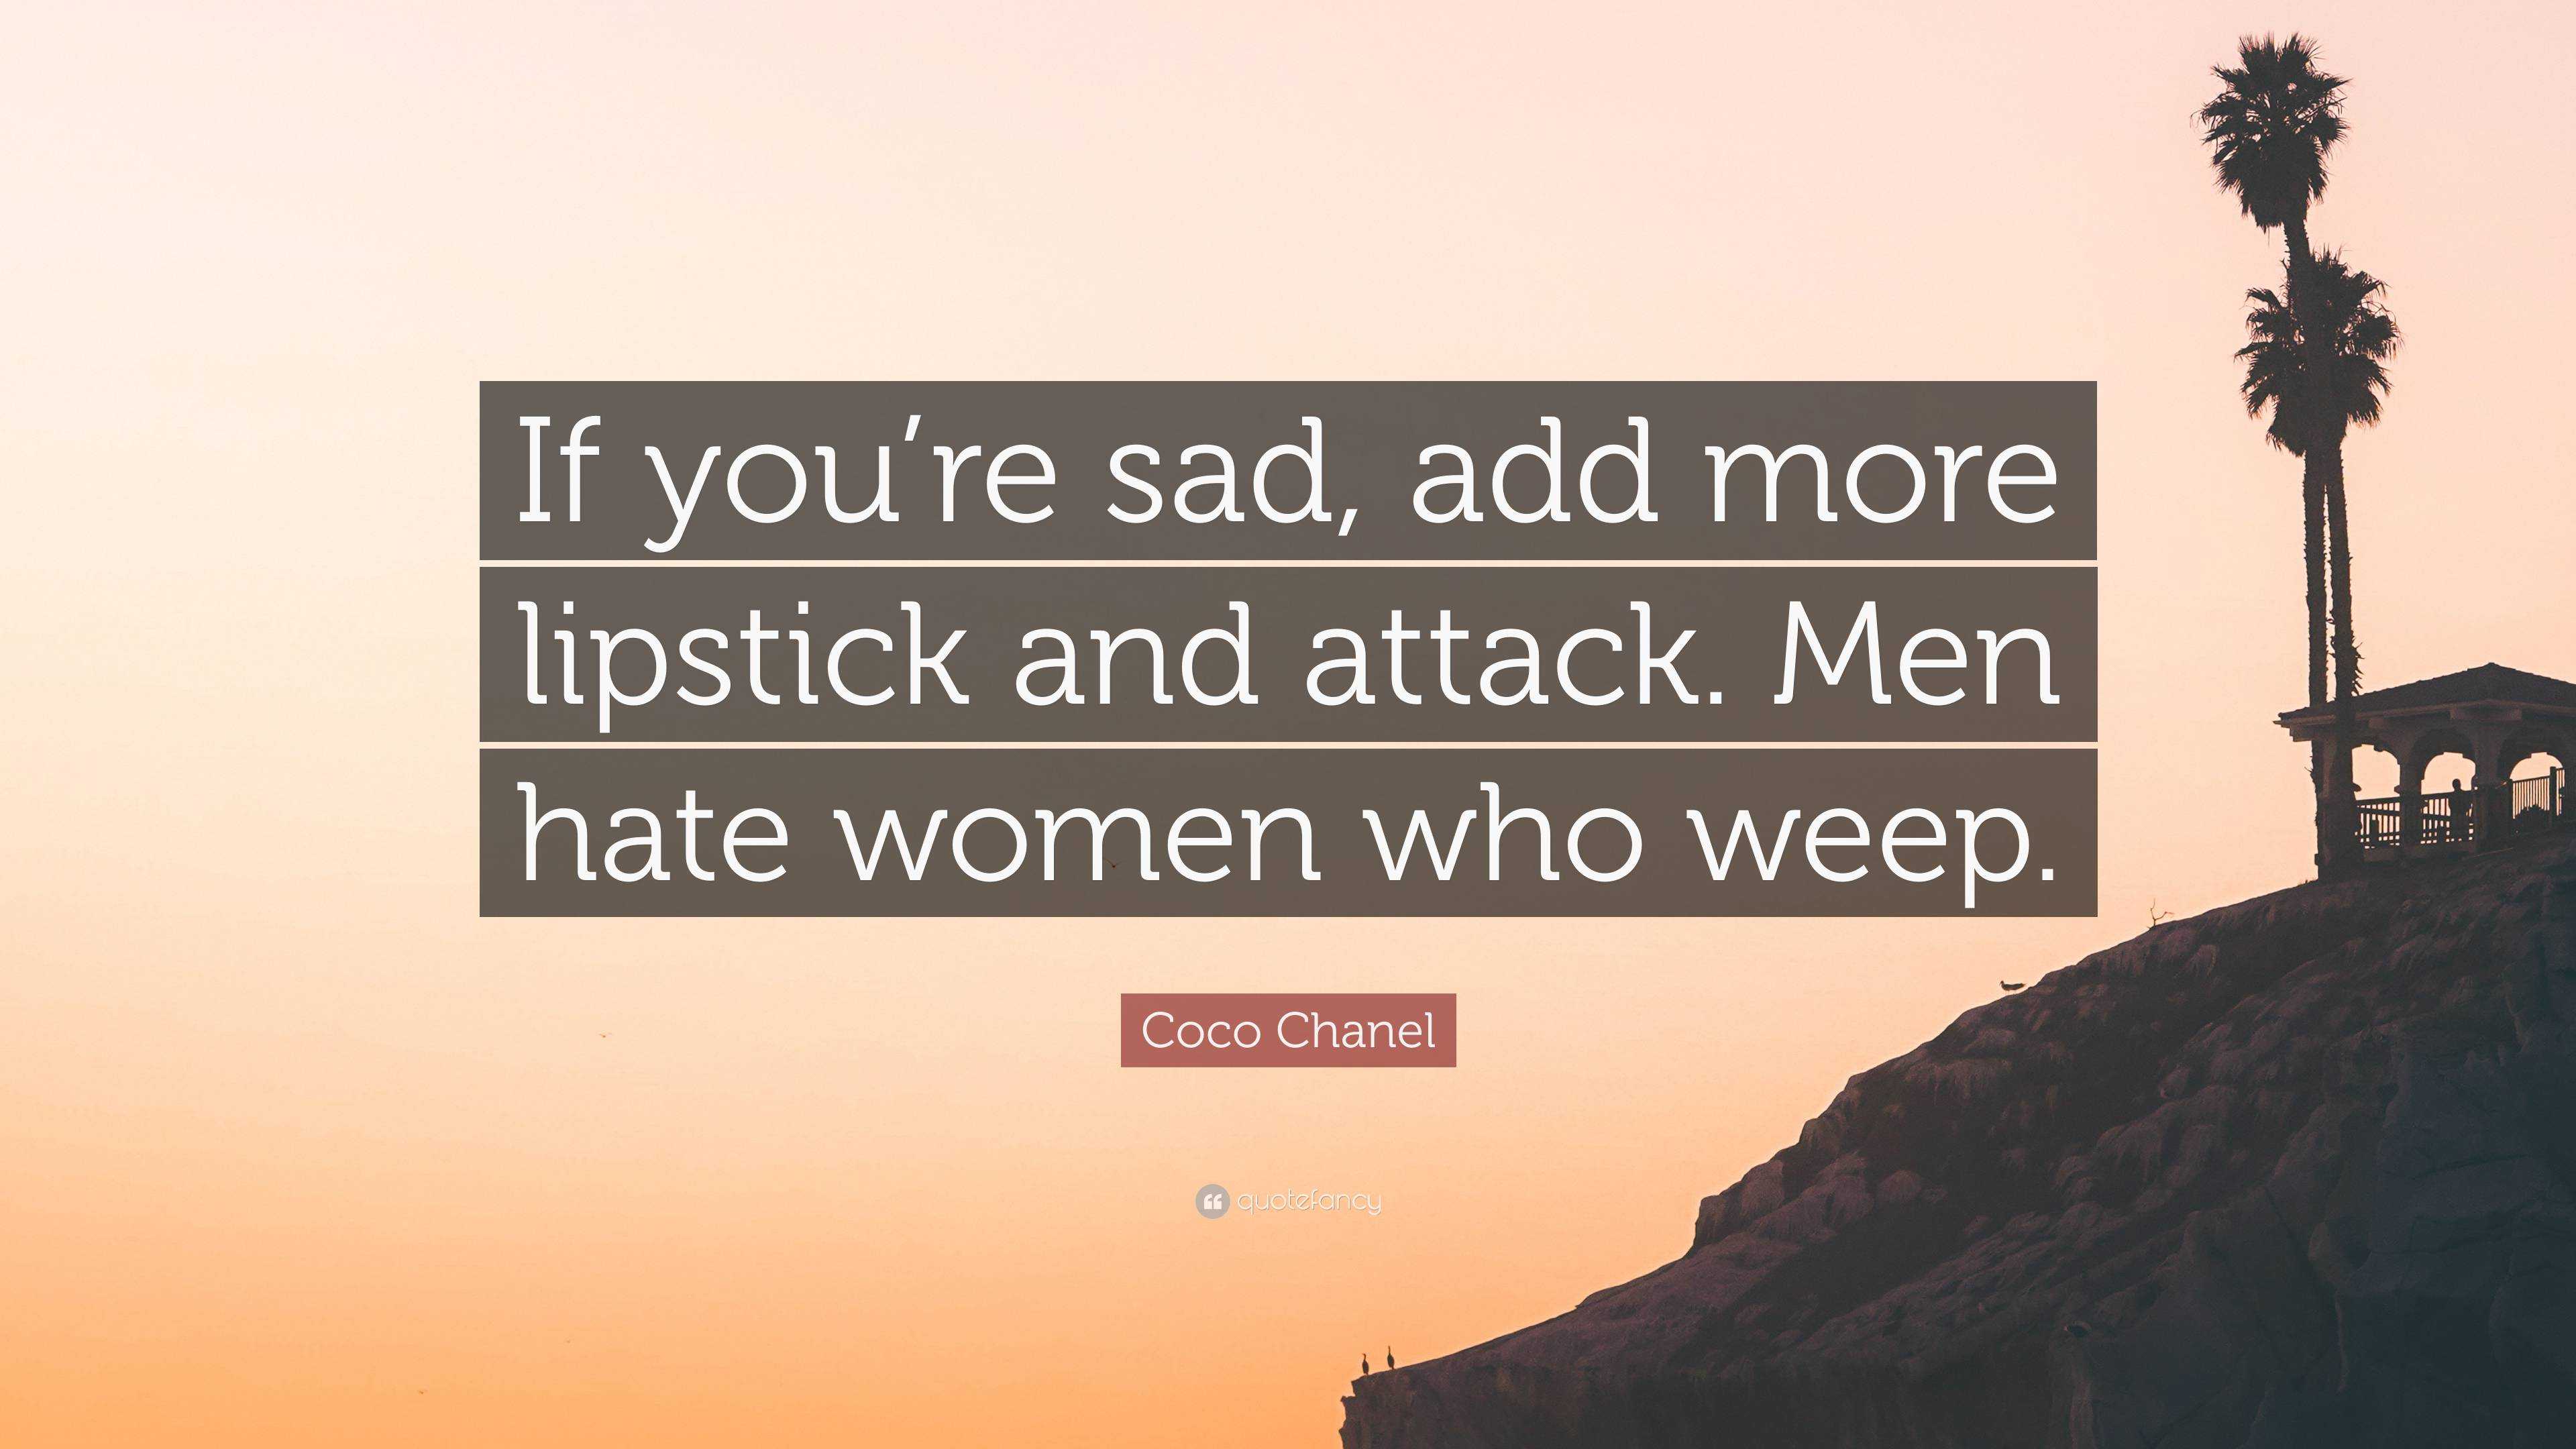 Coco Chanel Quote: “If you're sad, add more lipstick and attack